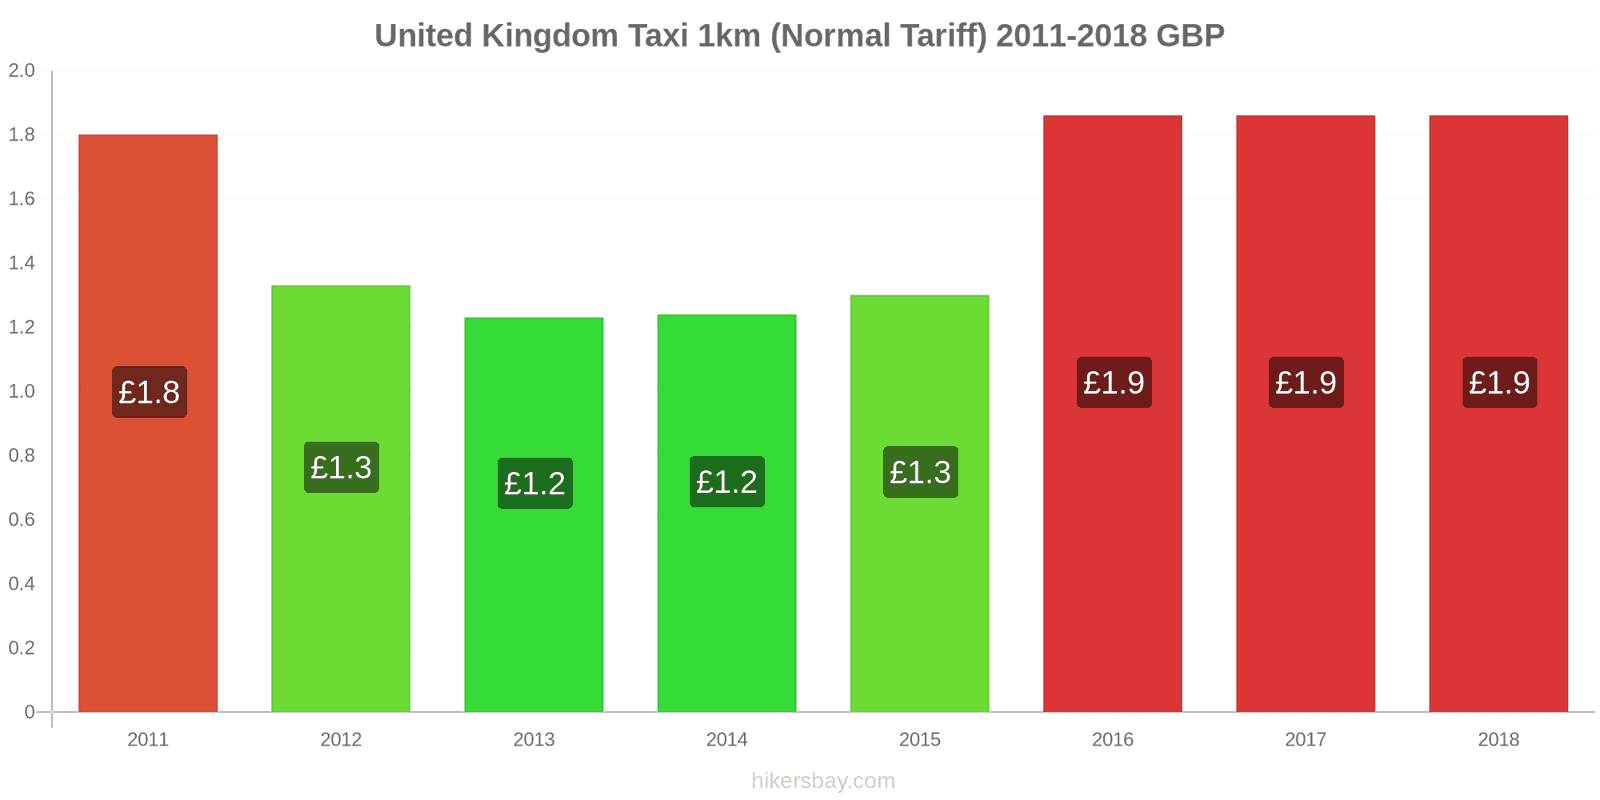 United Kingdom price changes Taxi 1km (Normal Tariff) hikersbay.com